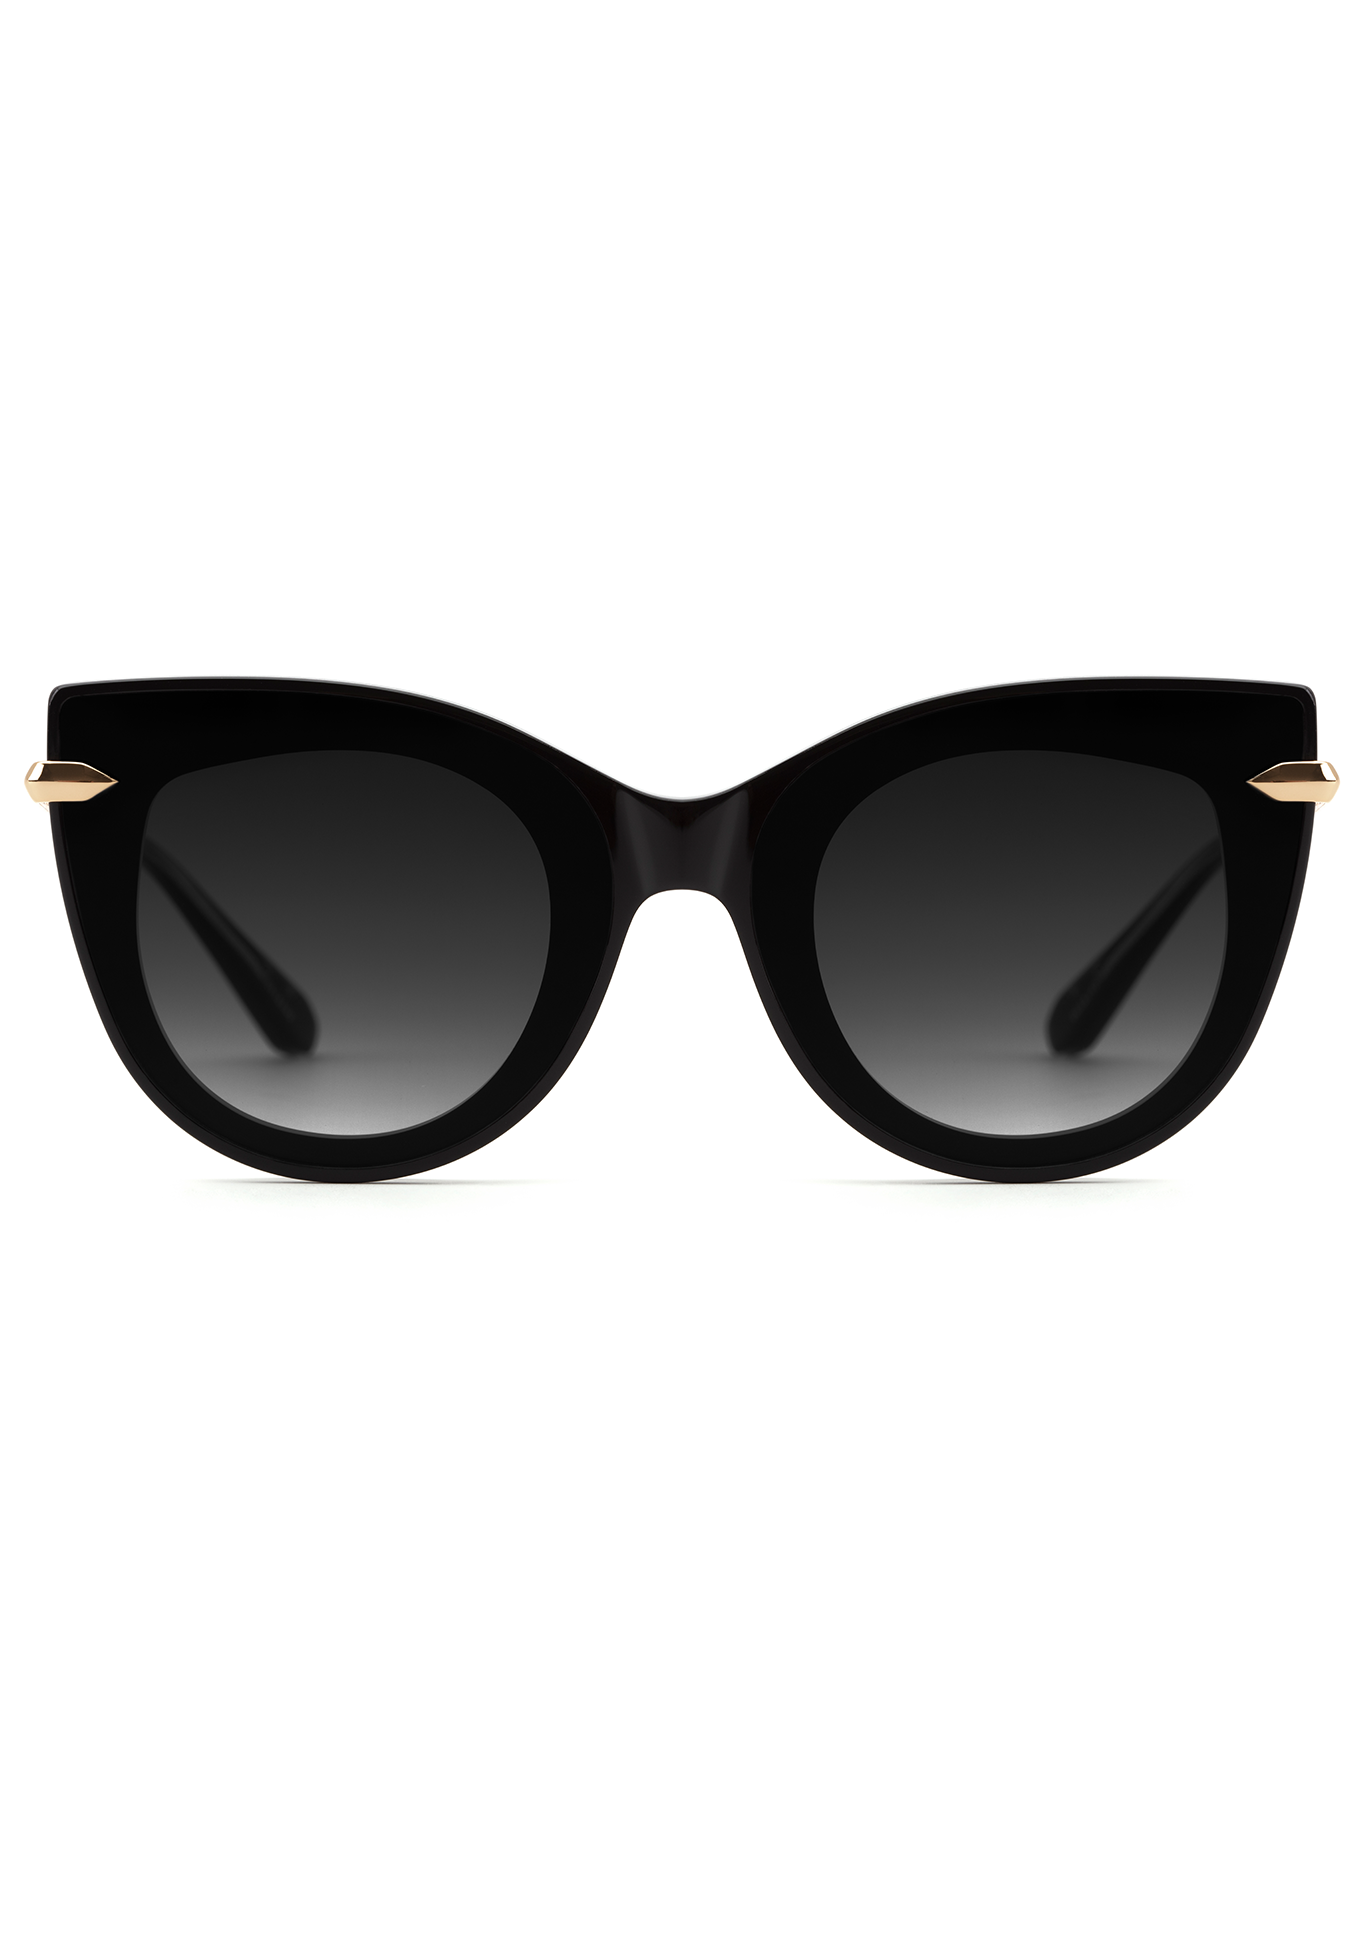 KREWE LAVEAU NYLON - Black and Crystal - Women Cat Eye Sunglasses - Overlay Lenses 62